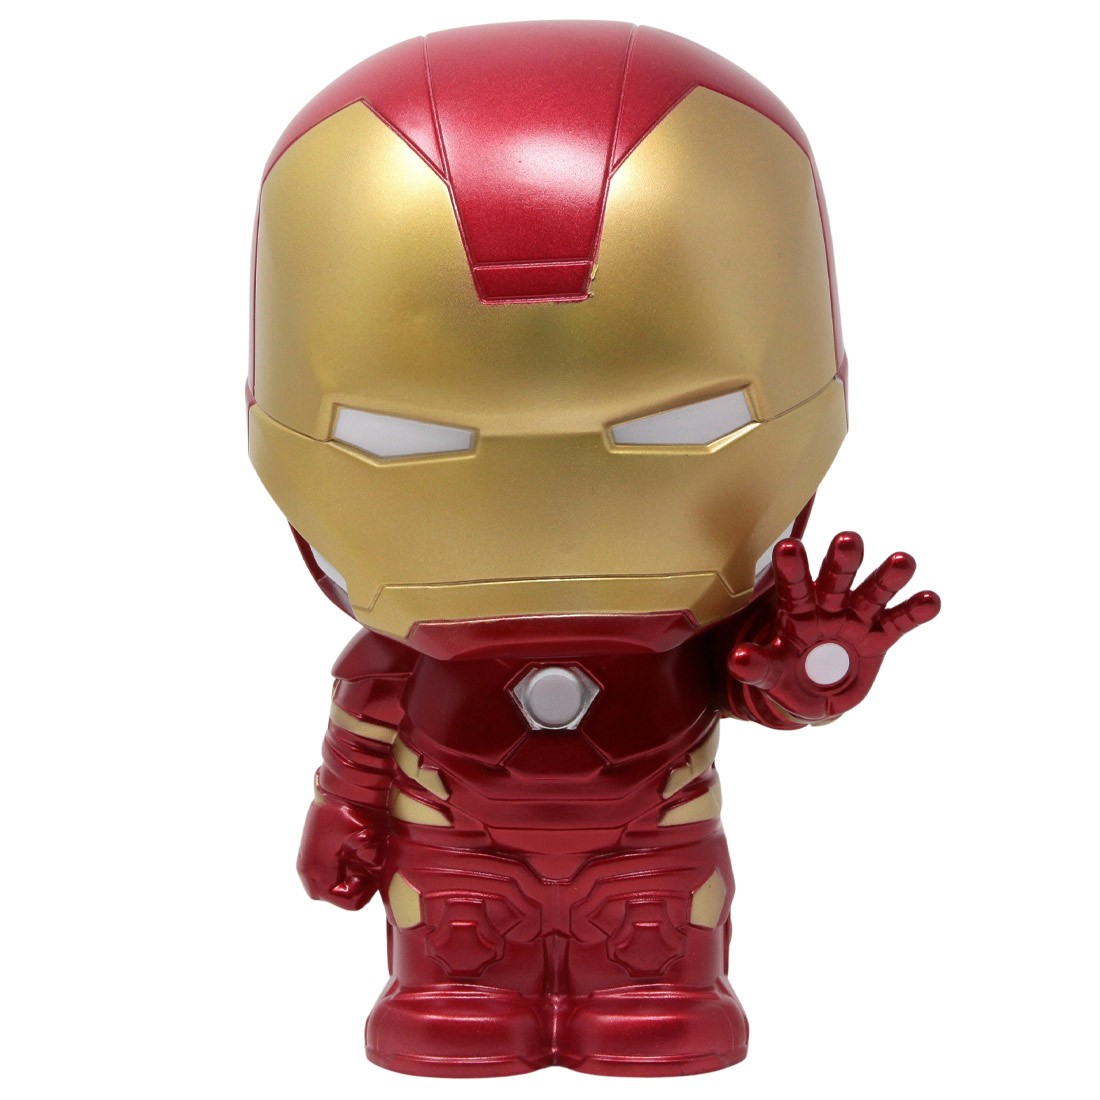 Monogram Marvel Avengers Iron Man Figural Bust Bank red